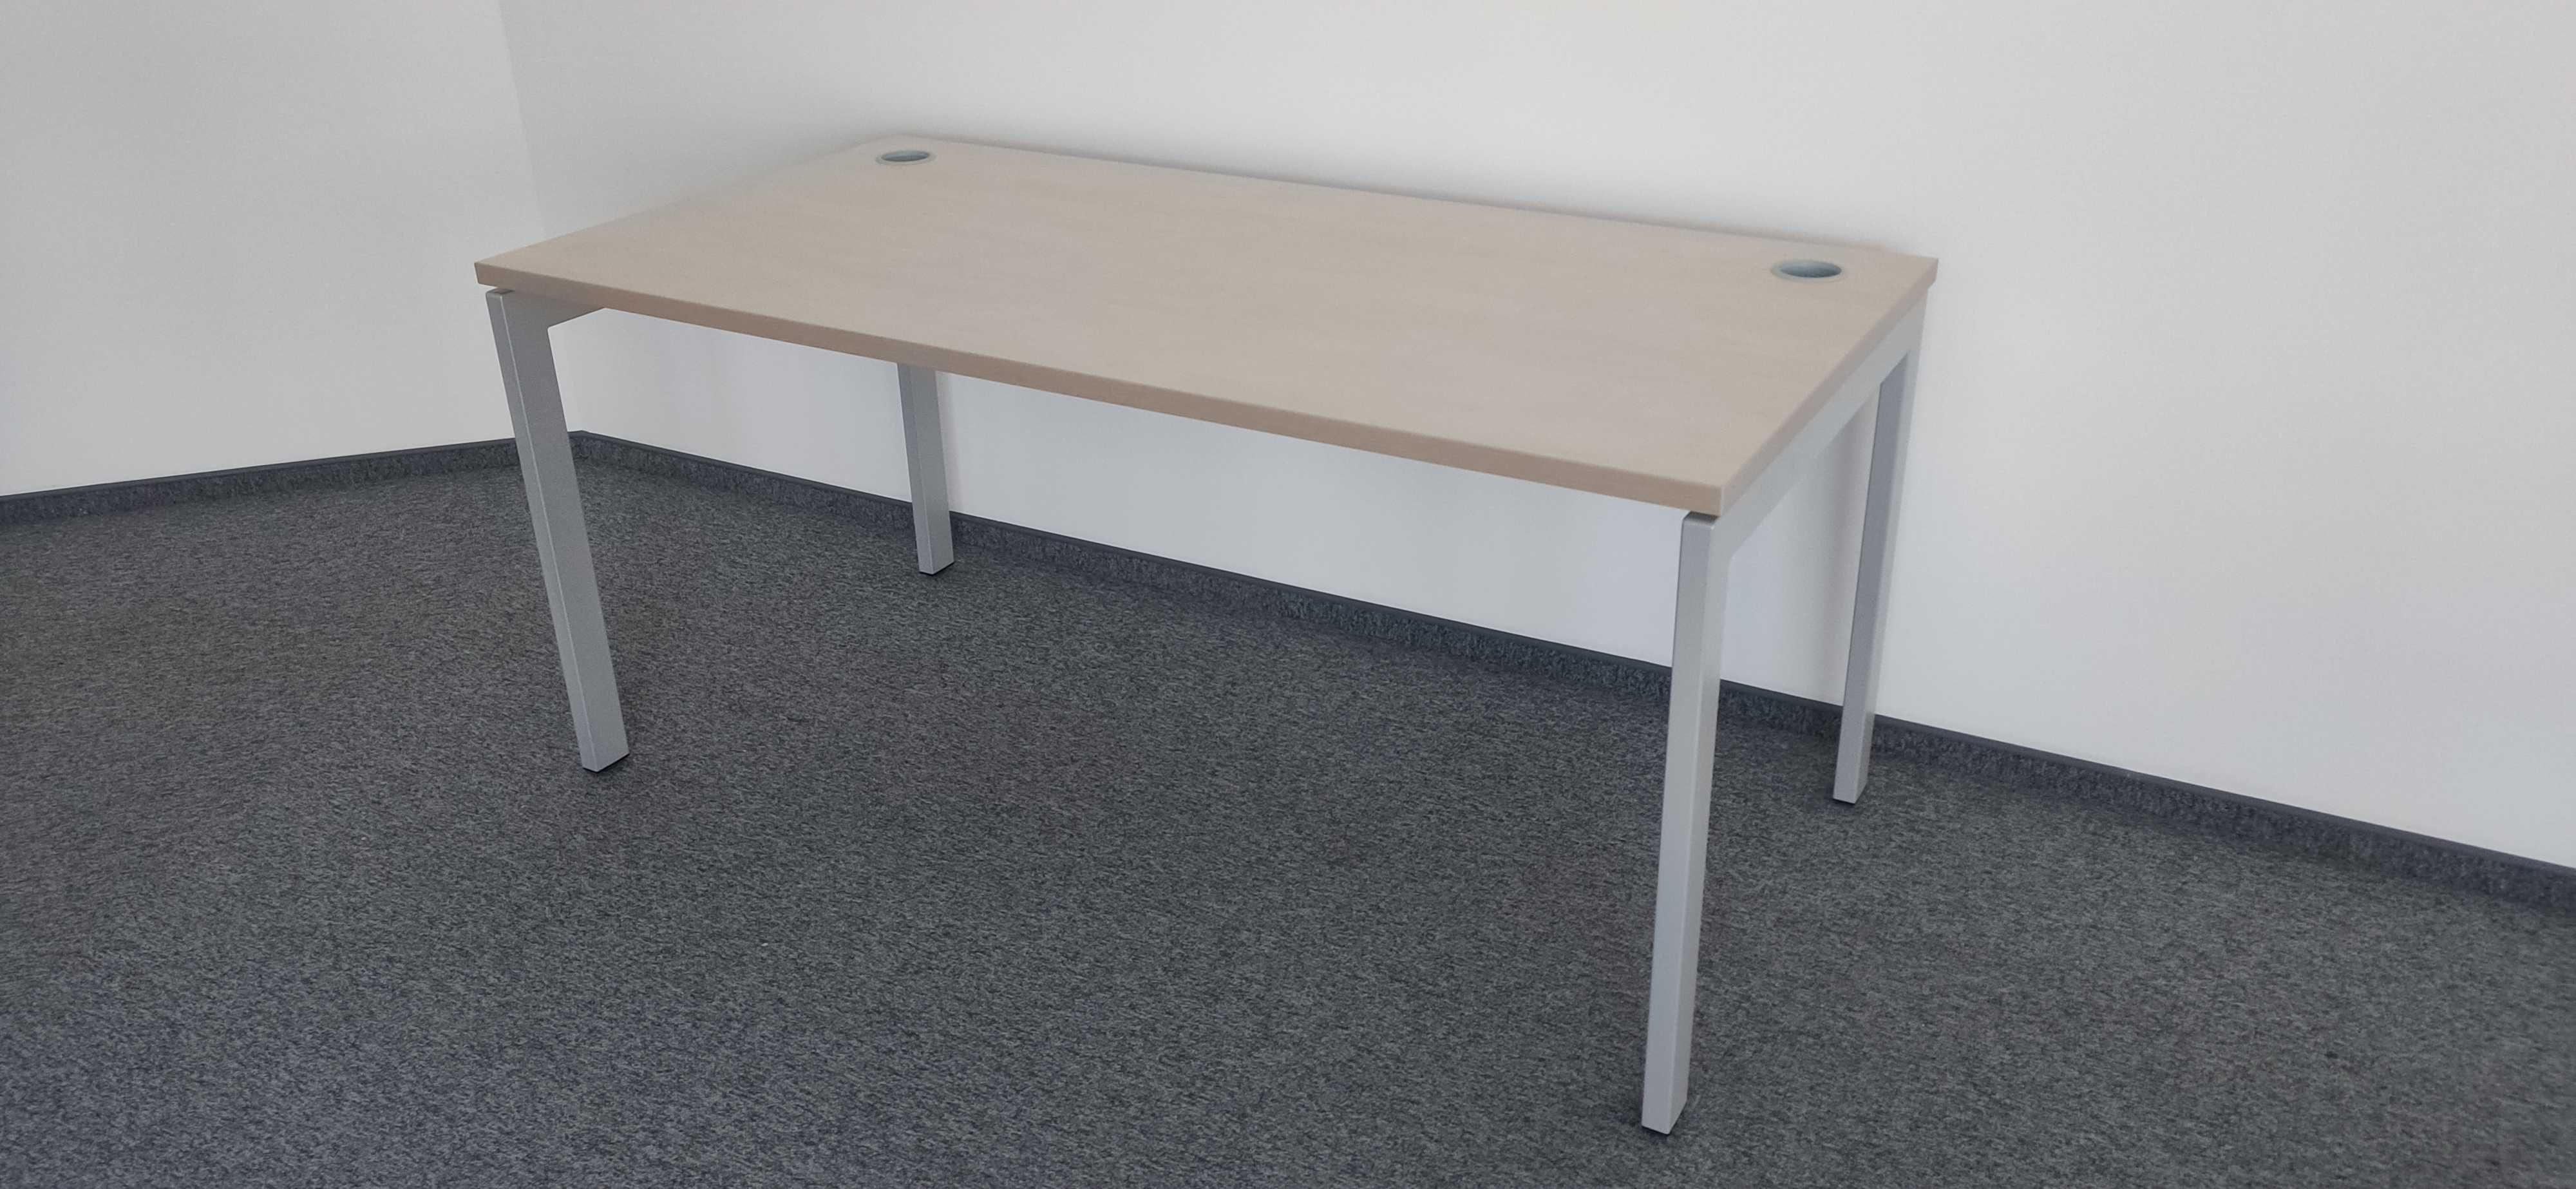 Biurko/stół biurowy 160x80 + gratis